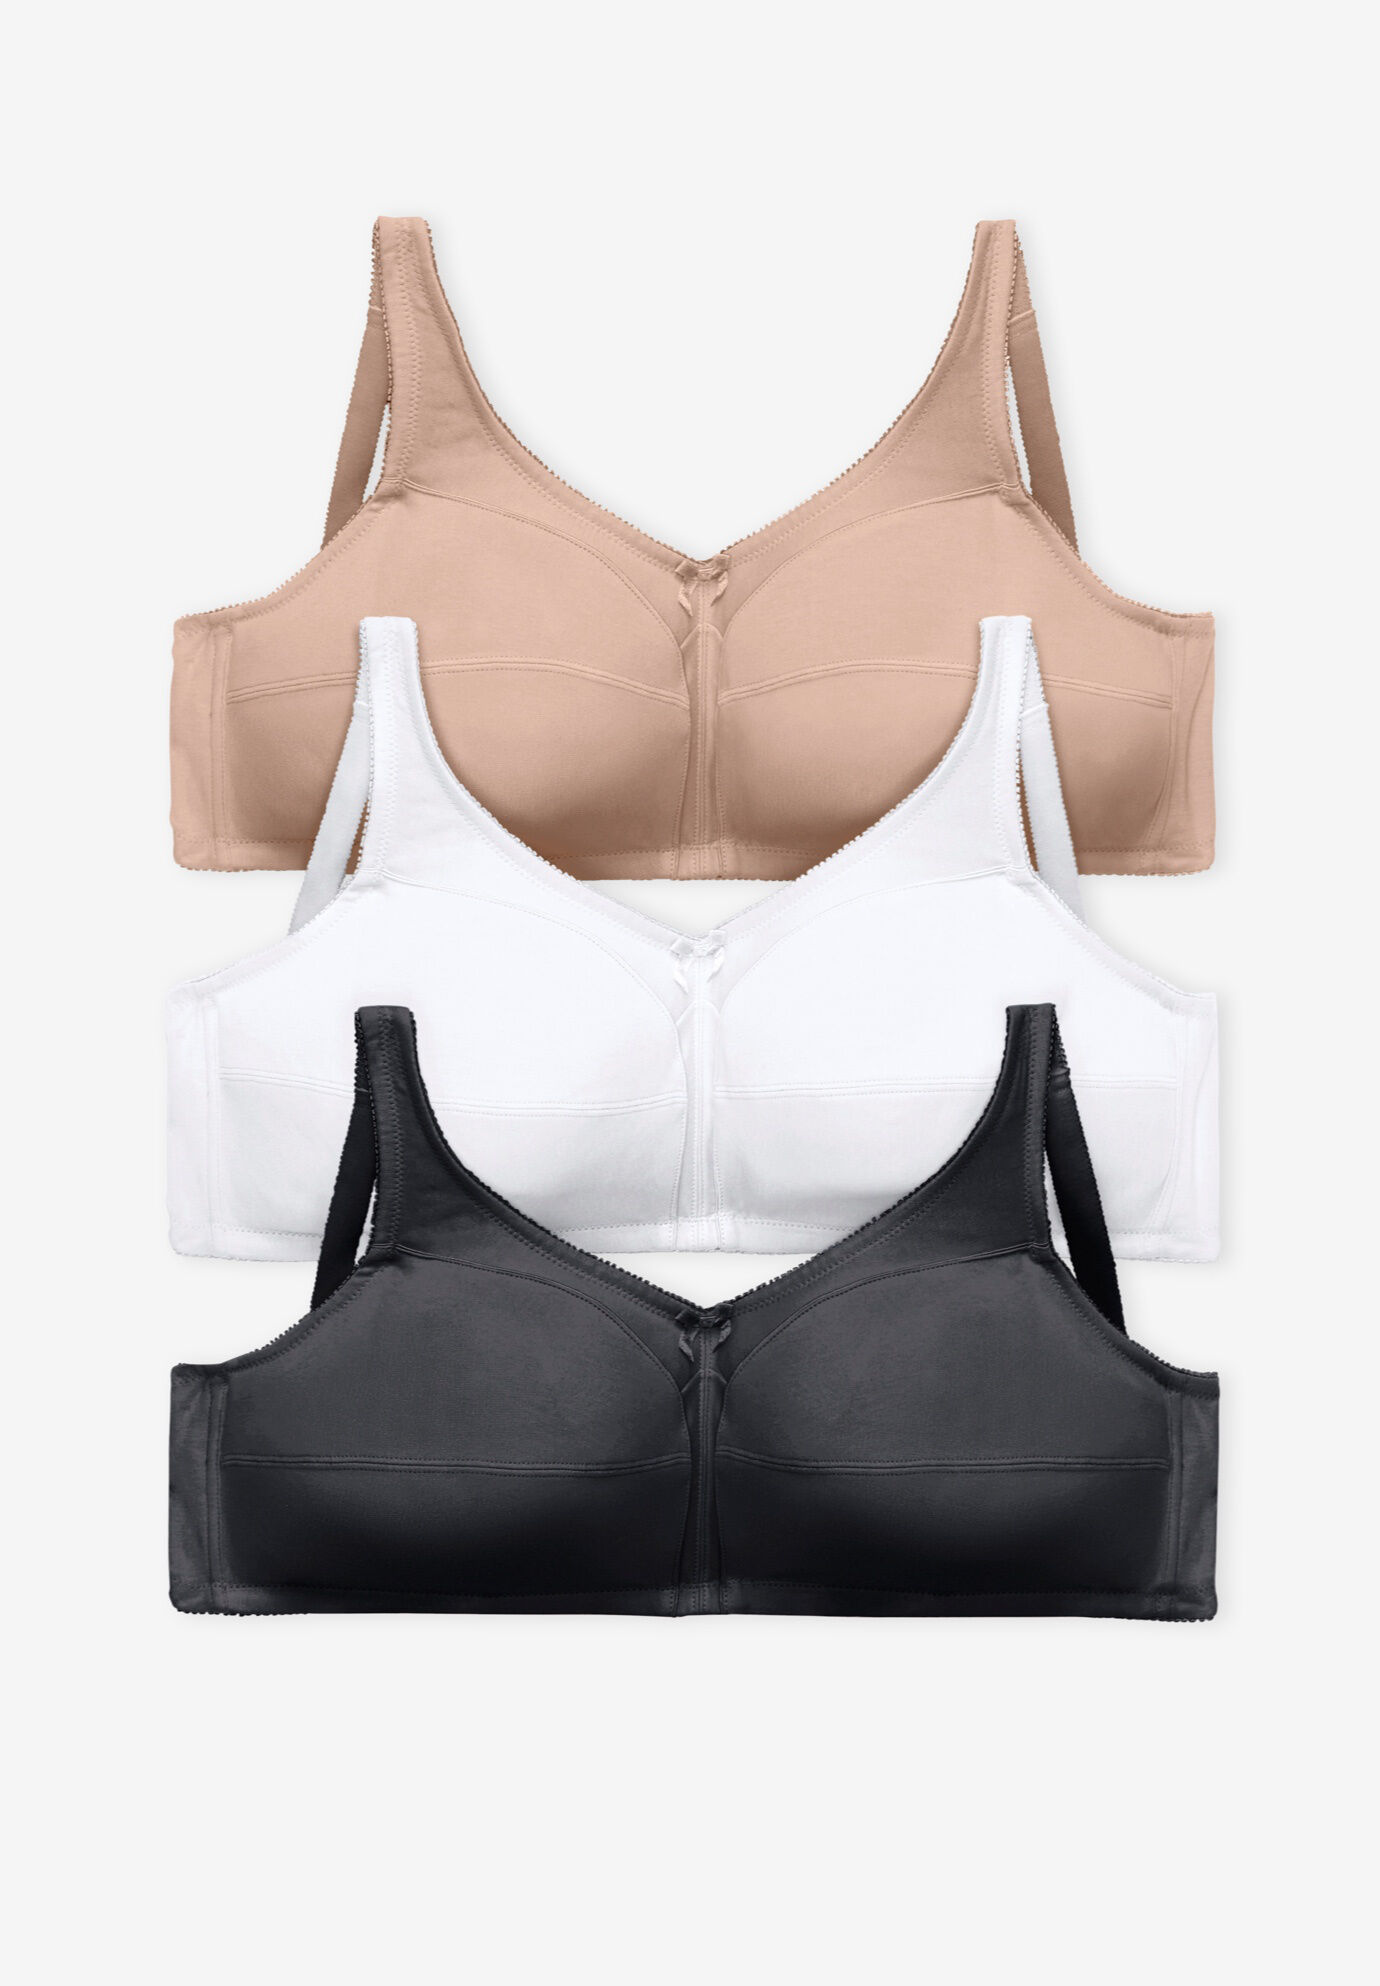 WHITE Cotton bra without push-up - XS - VivienVance